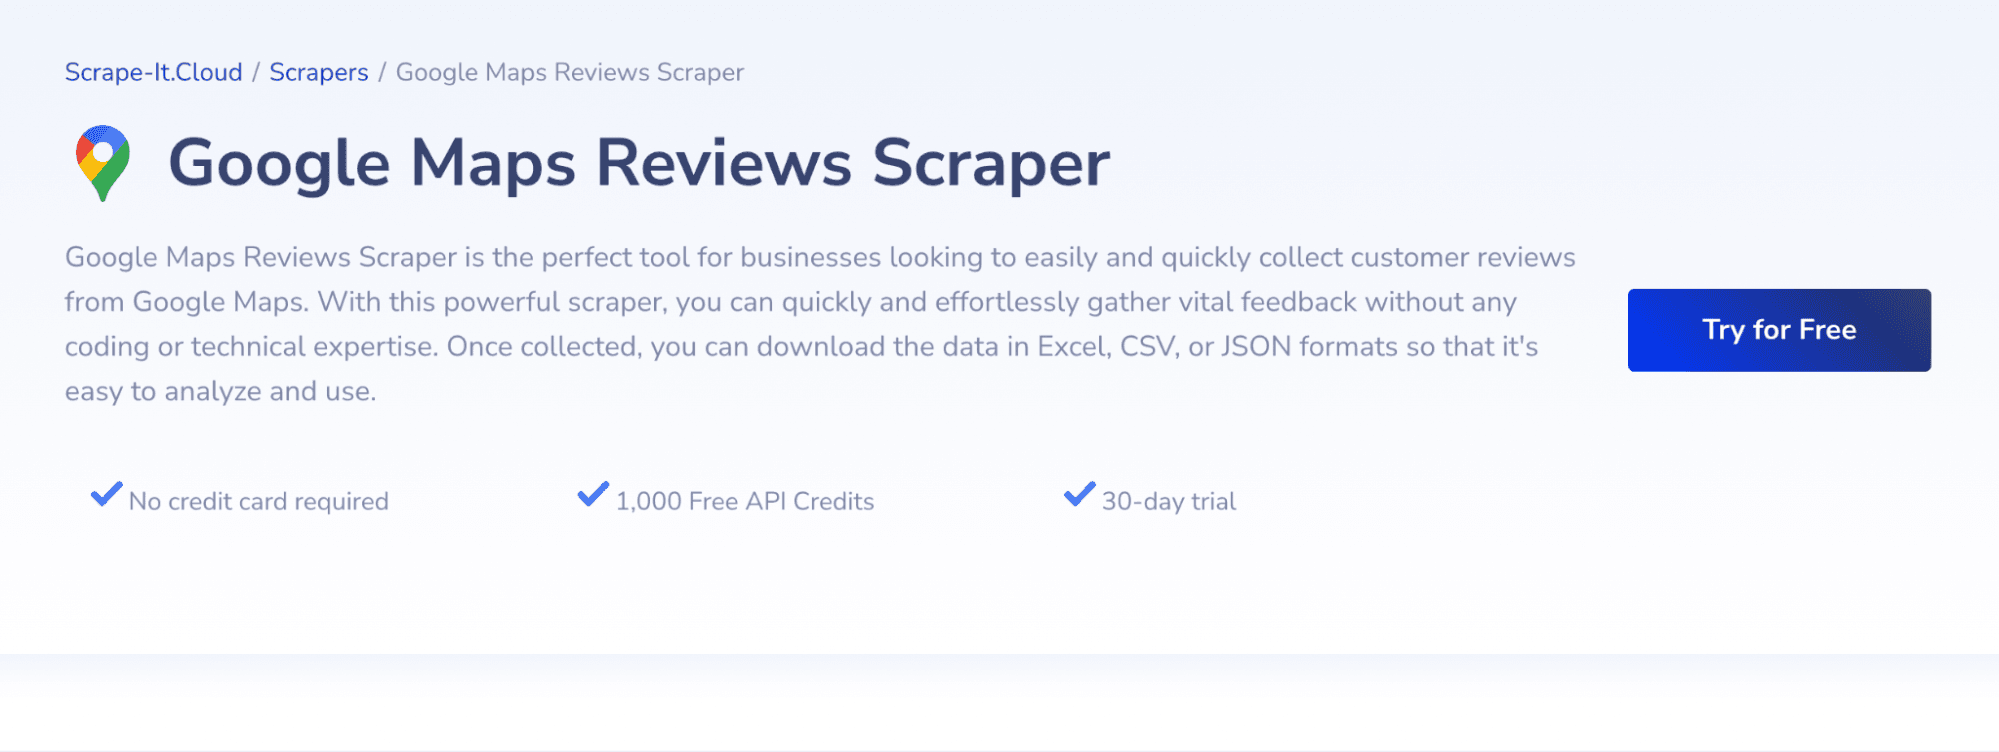 google maps reviews scraper scrape it product page - image13.png